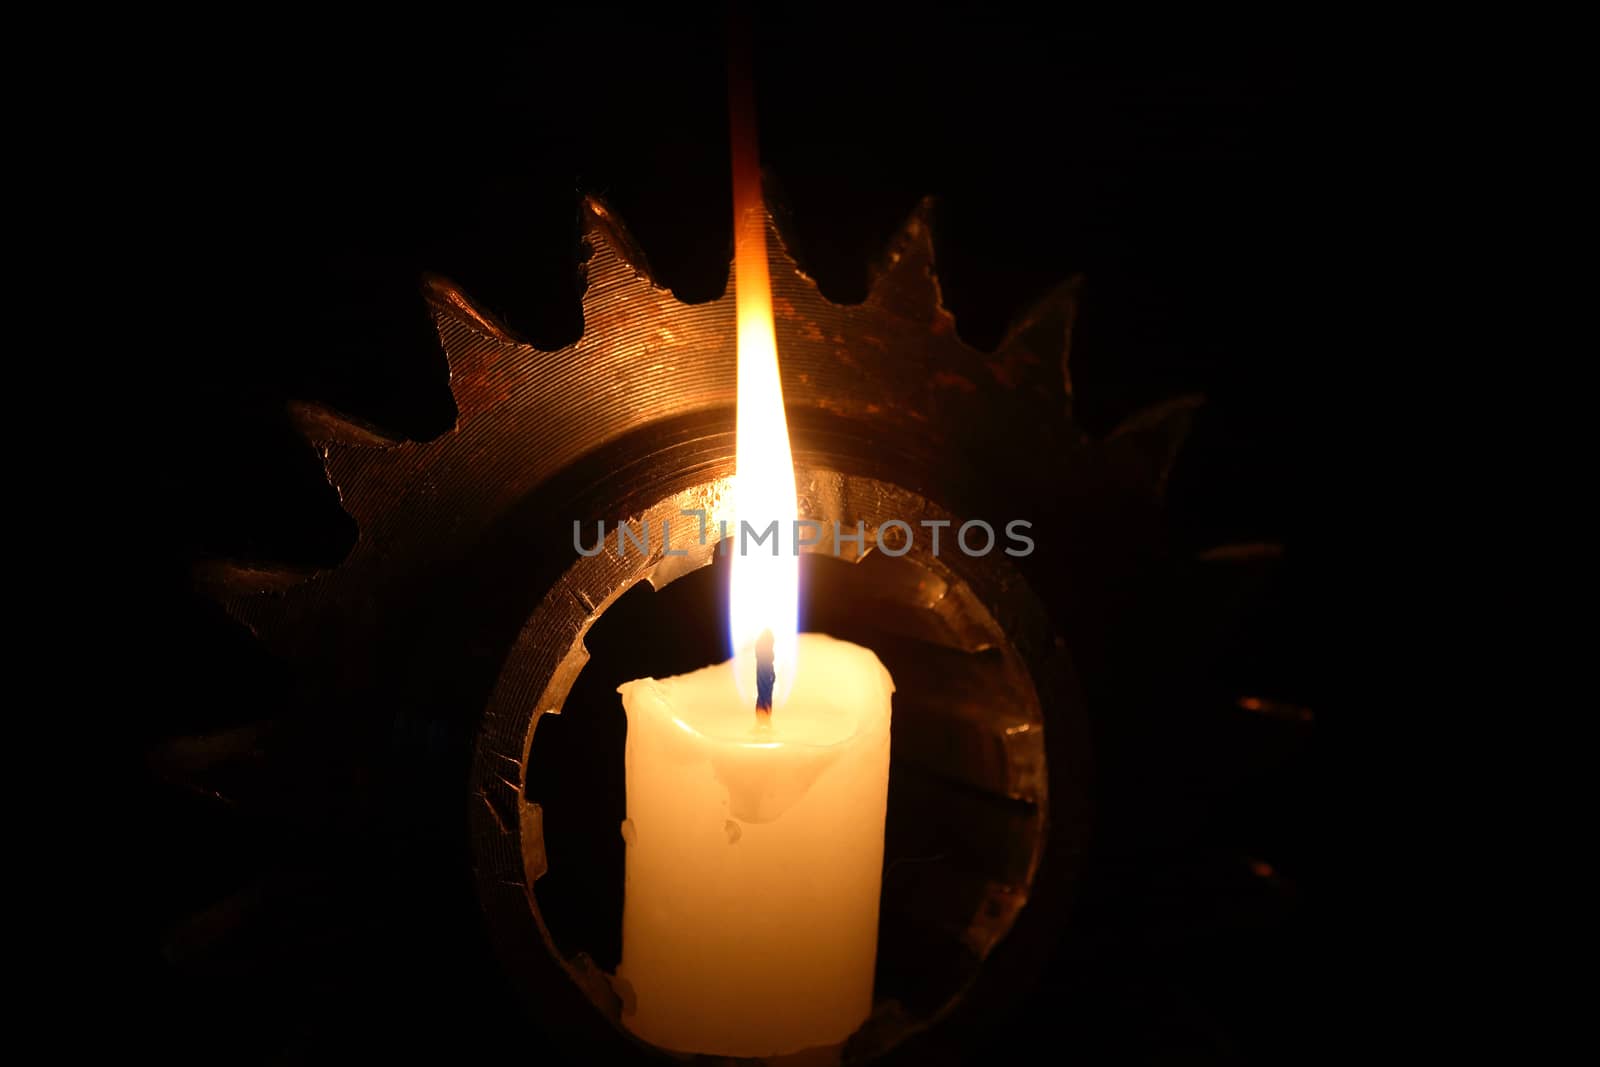 Candle Inside Gear by kvkirillov